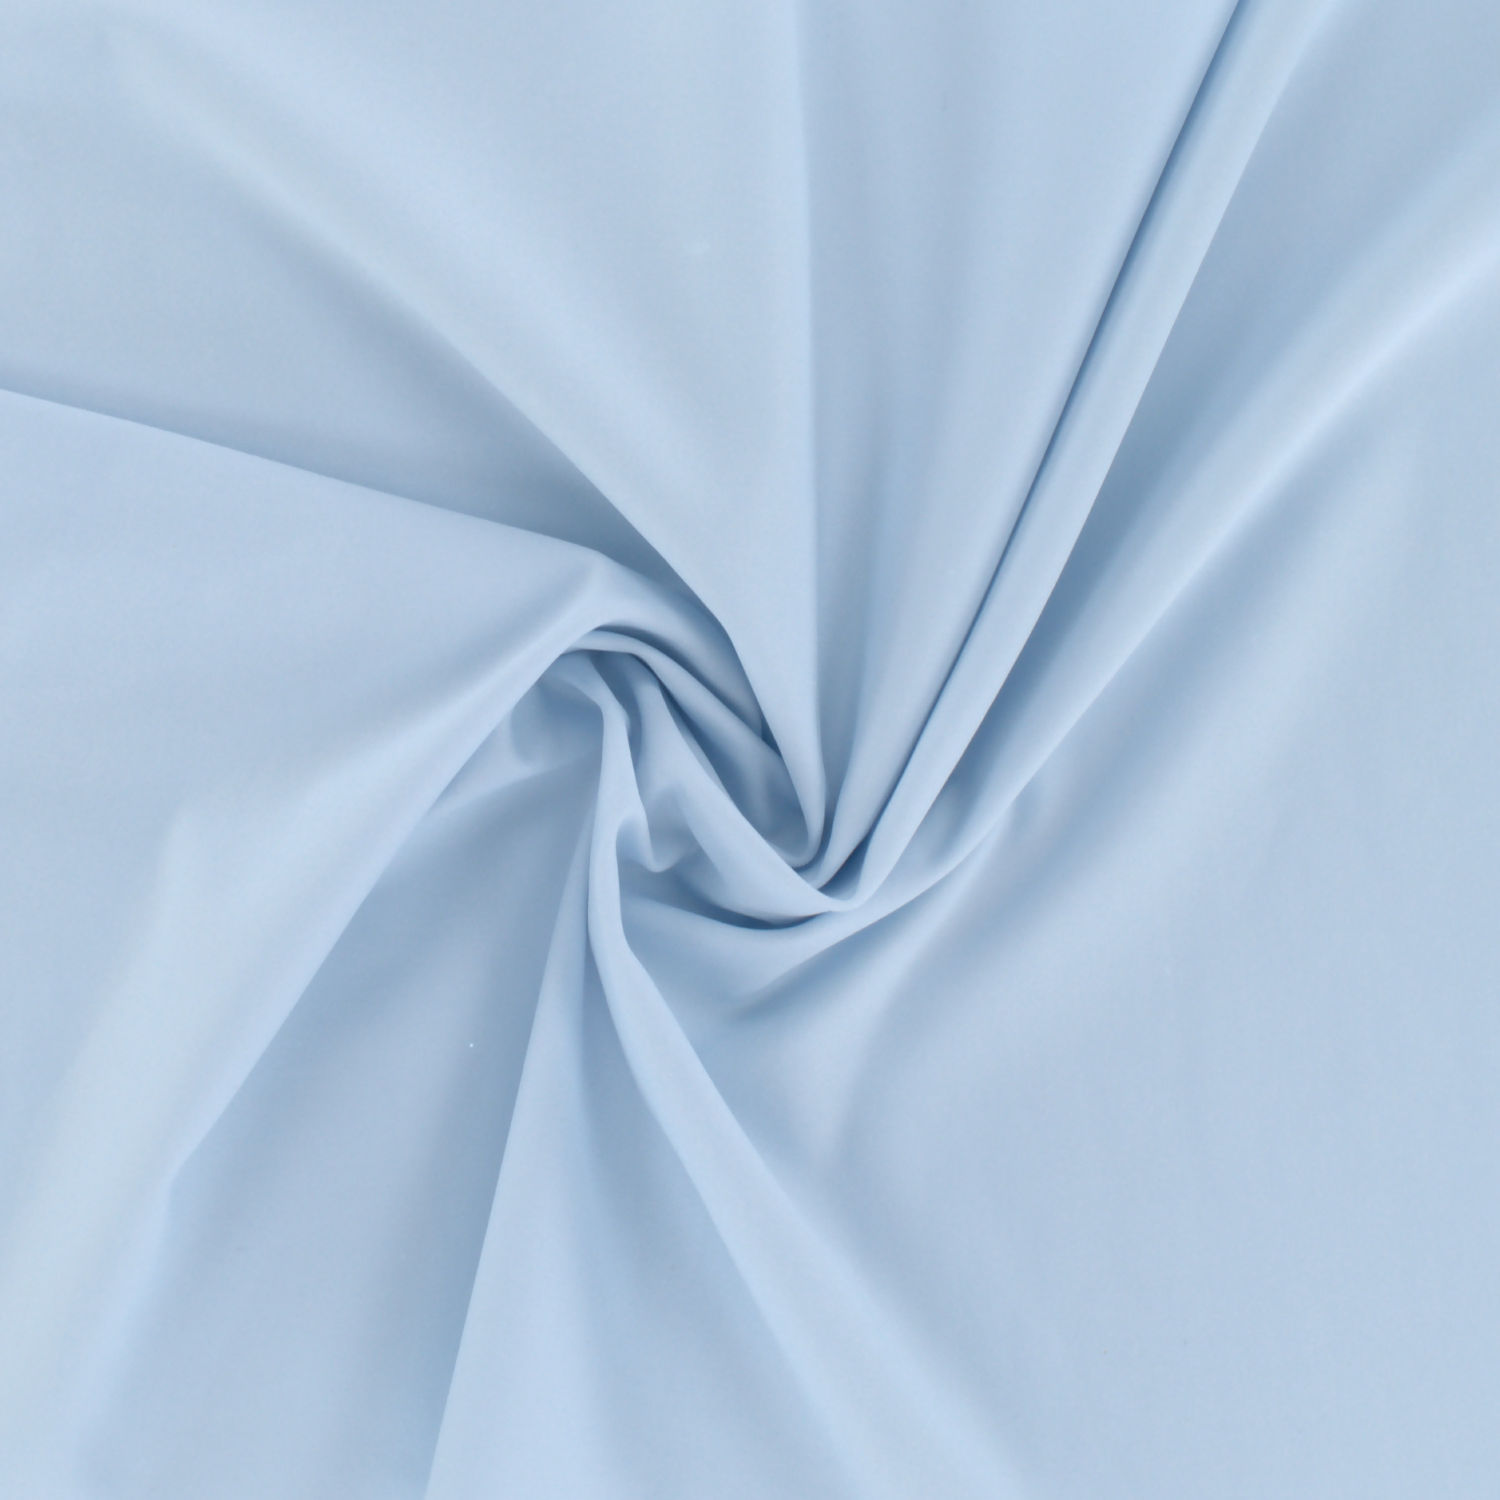 High quality Lightweight 87% Nylon 13% Spandex Single Jersey Fabric